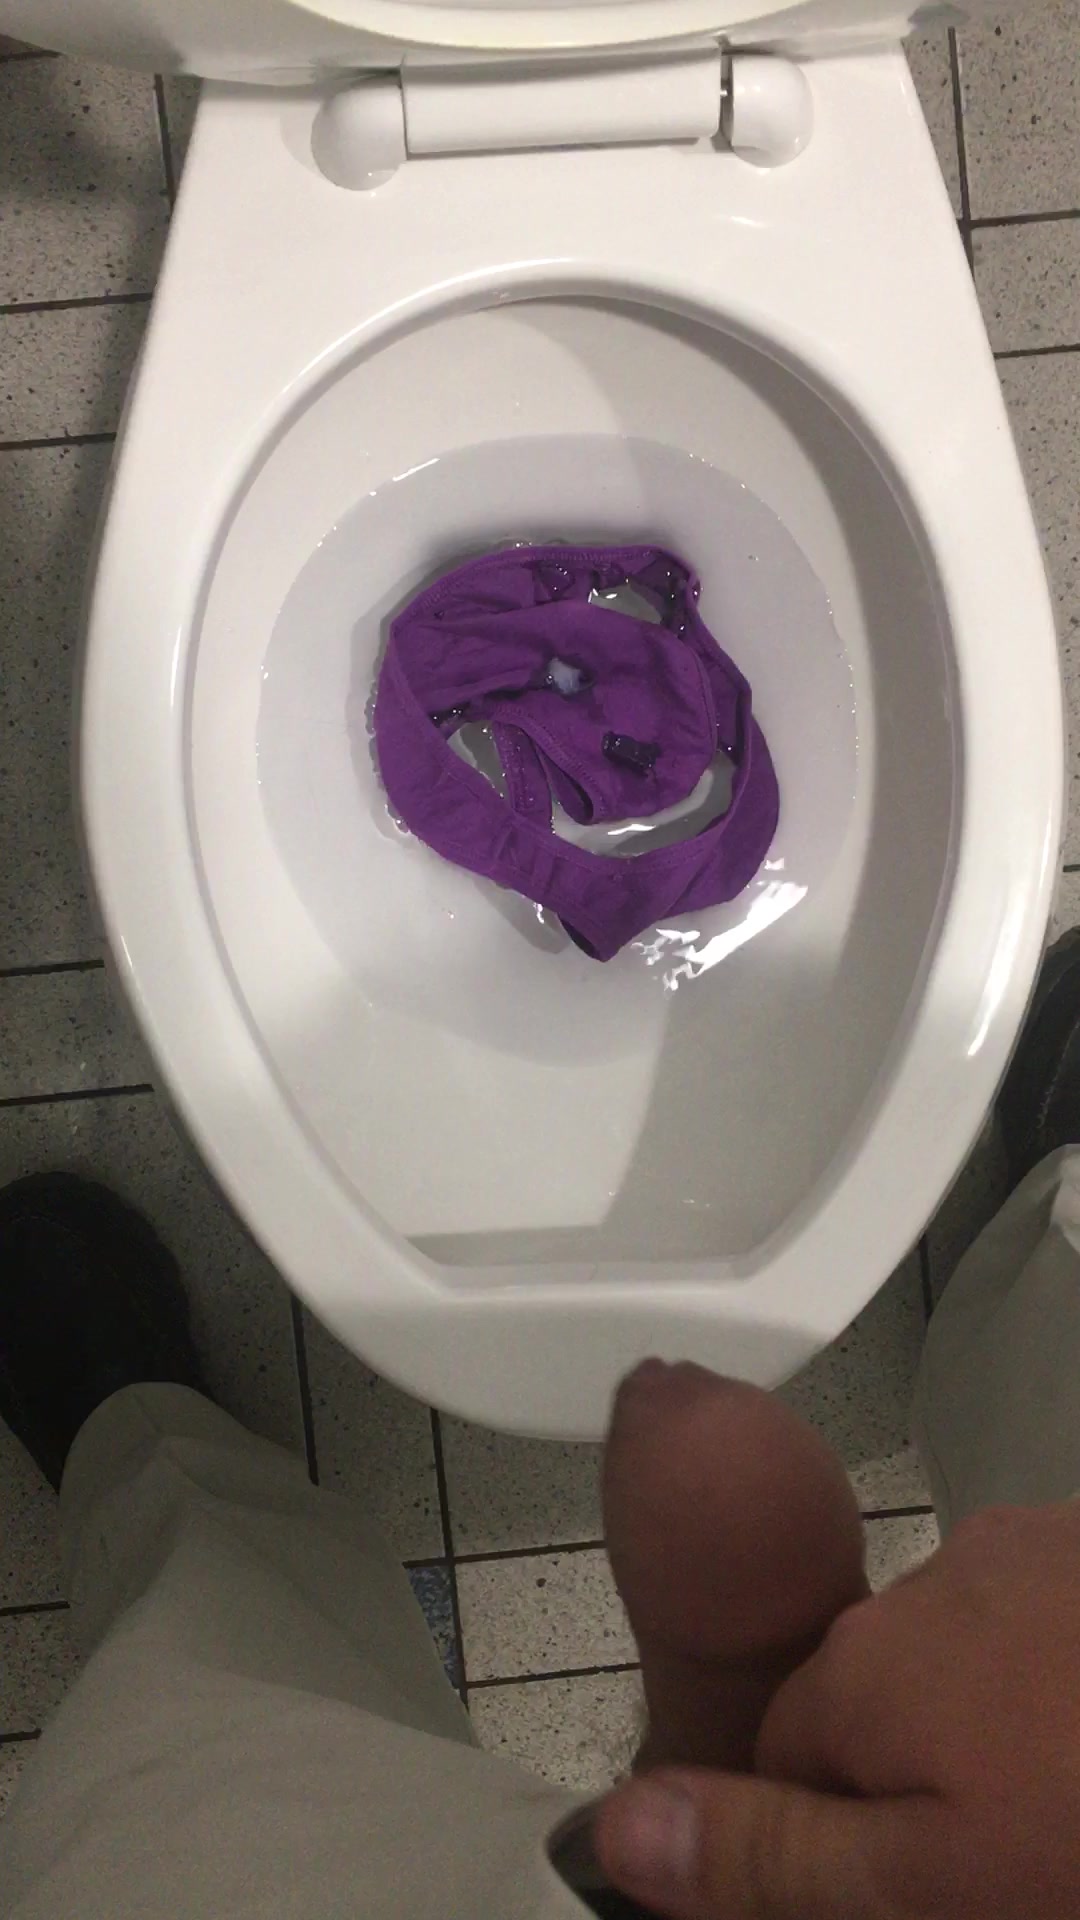 Cumming in panties then flushing them down the toilet